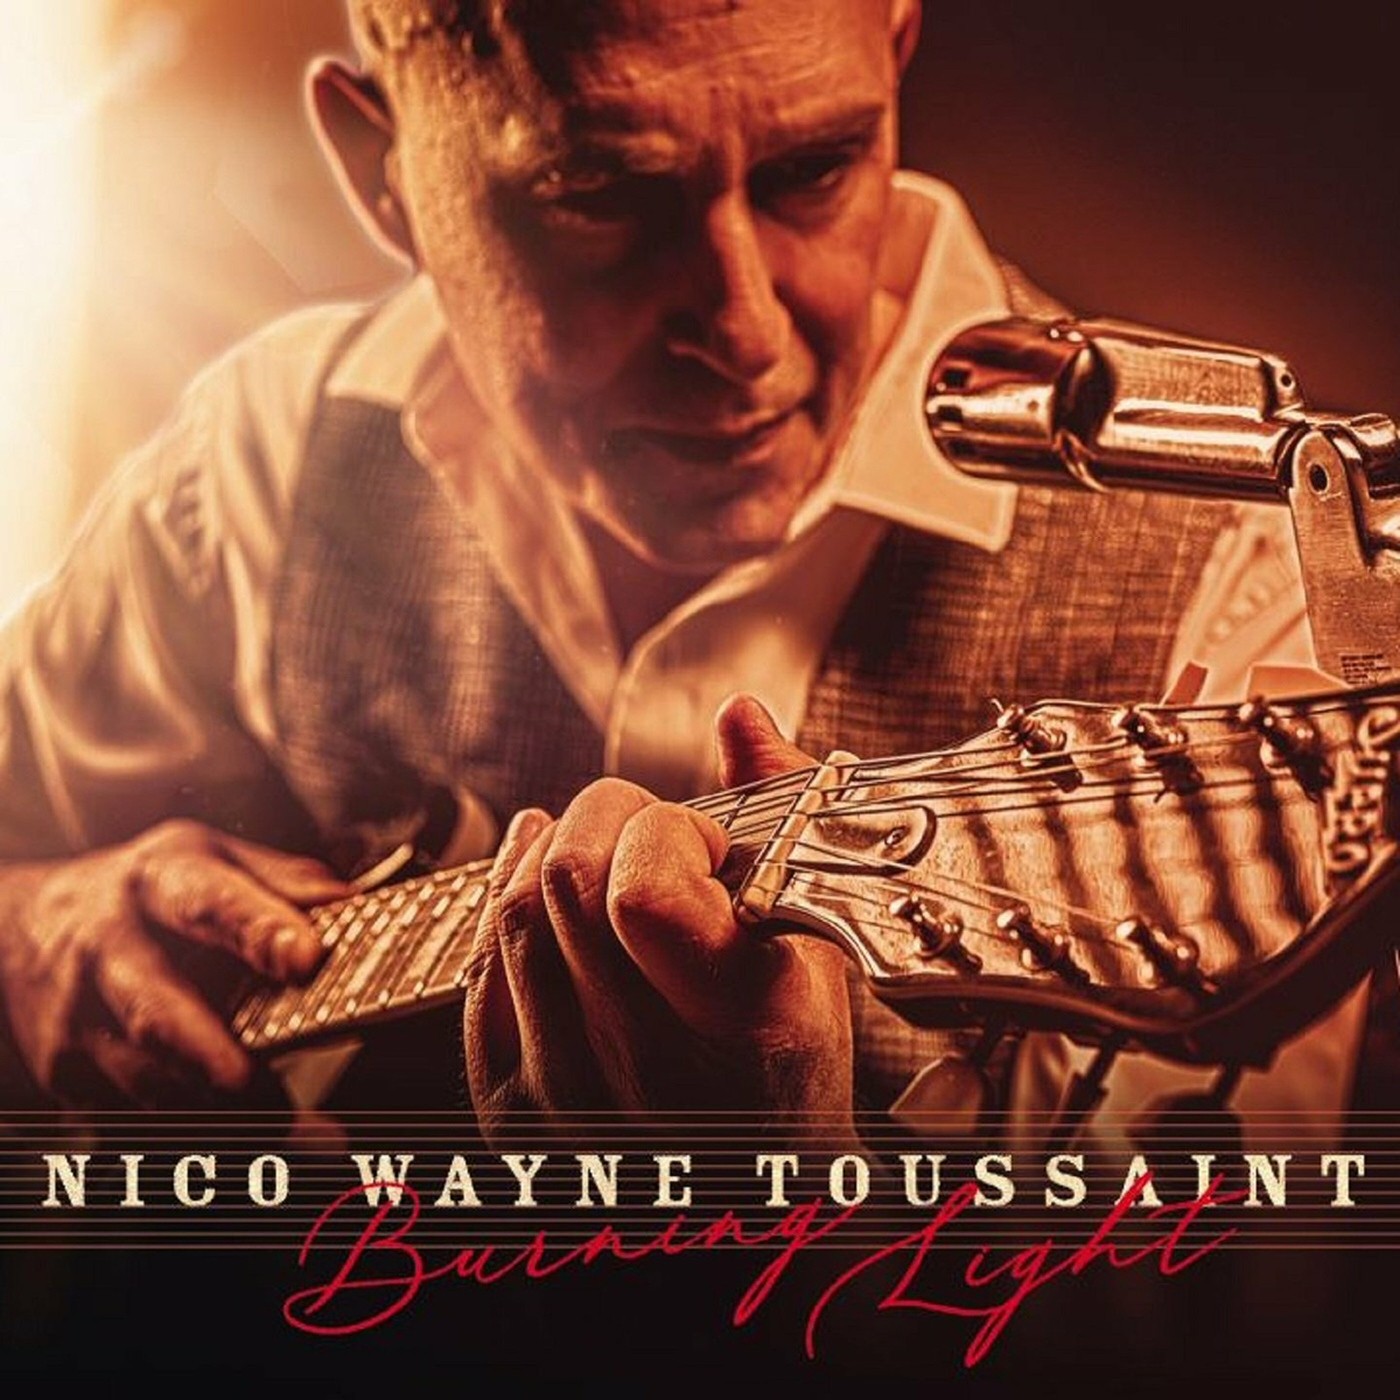 Nico Wayne Toussaint - Burning Light